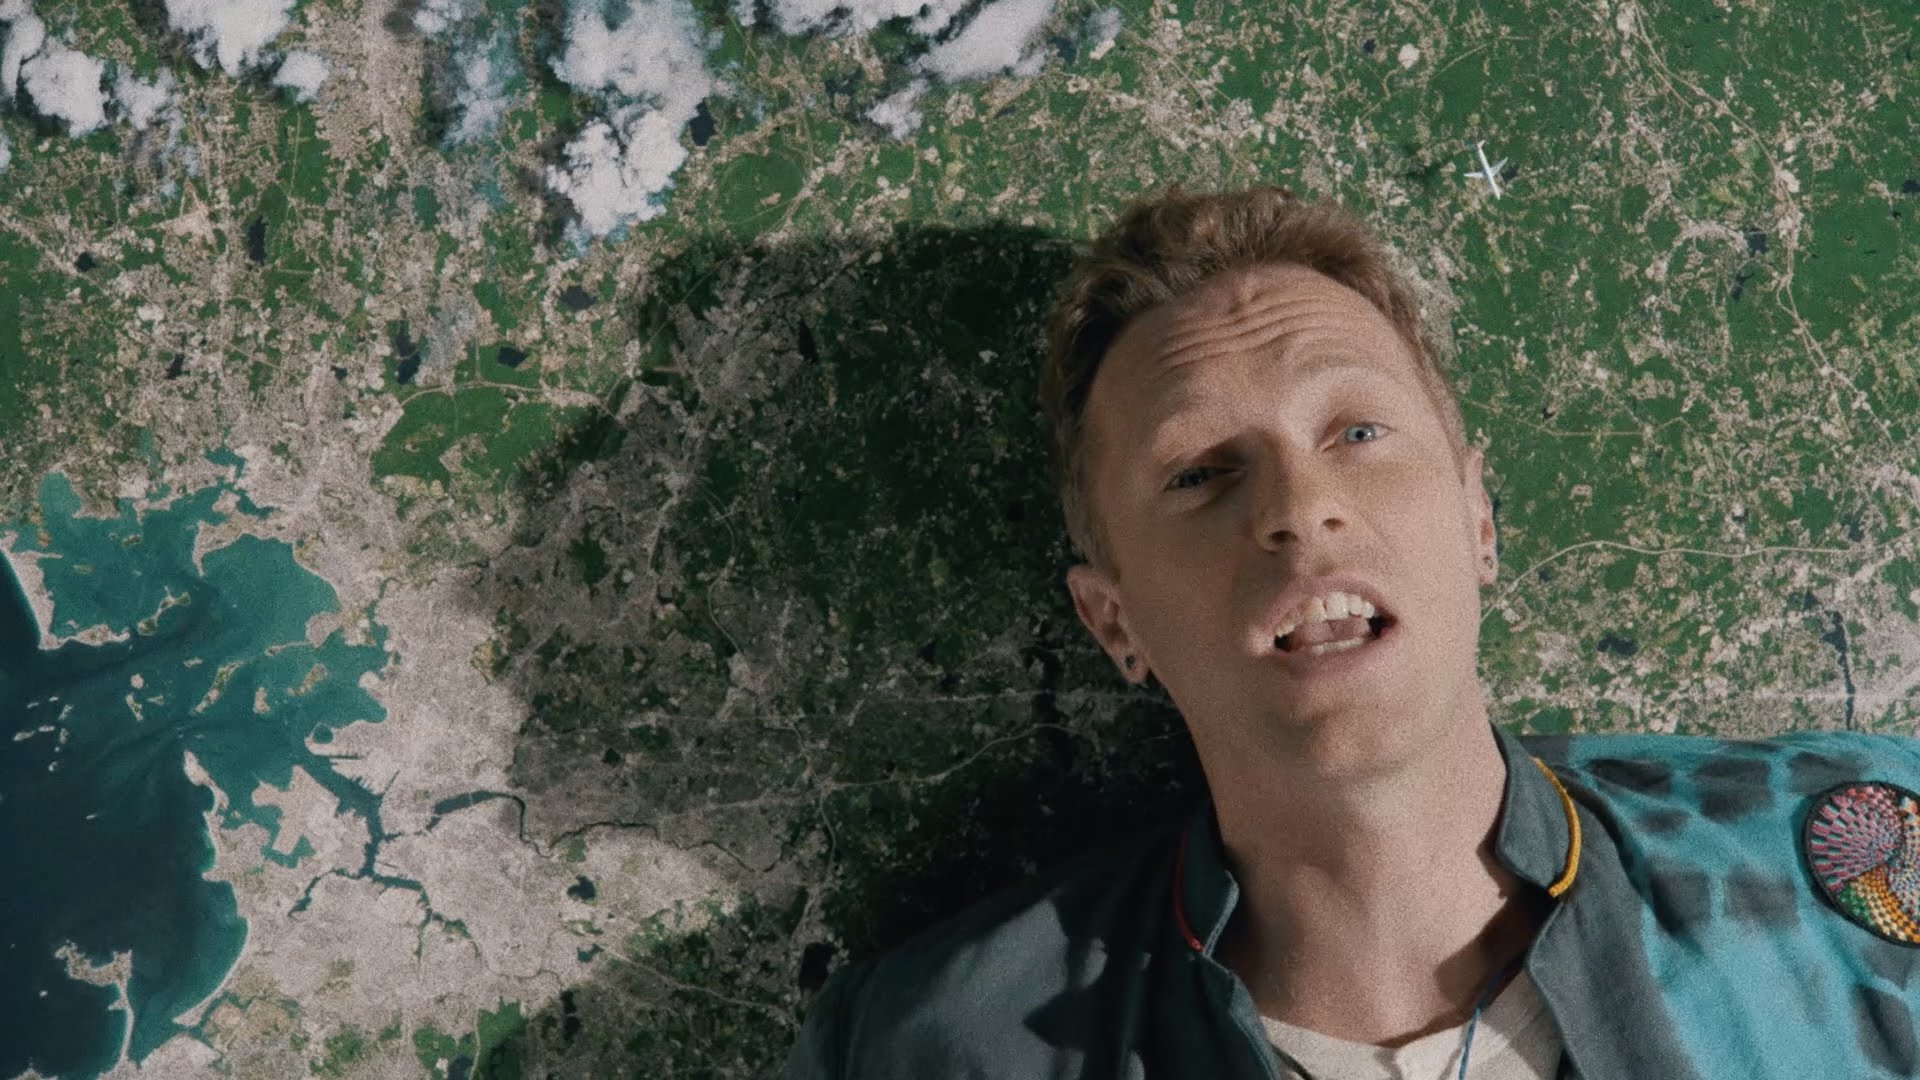 Скриншот из клипа Coldplay  "Up&Up"